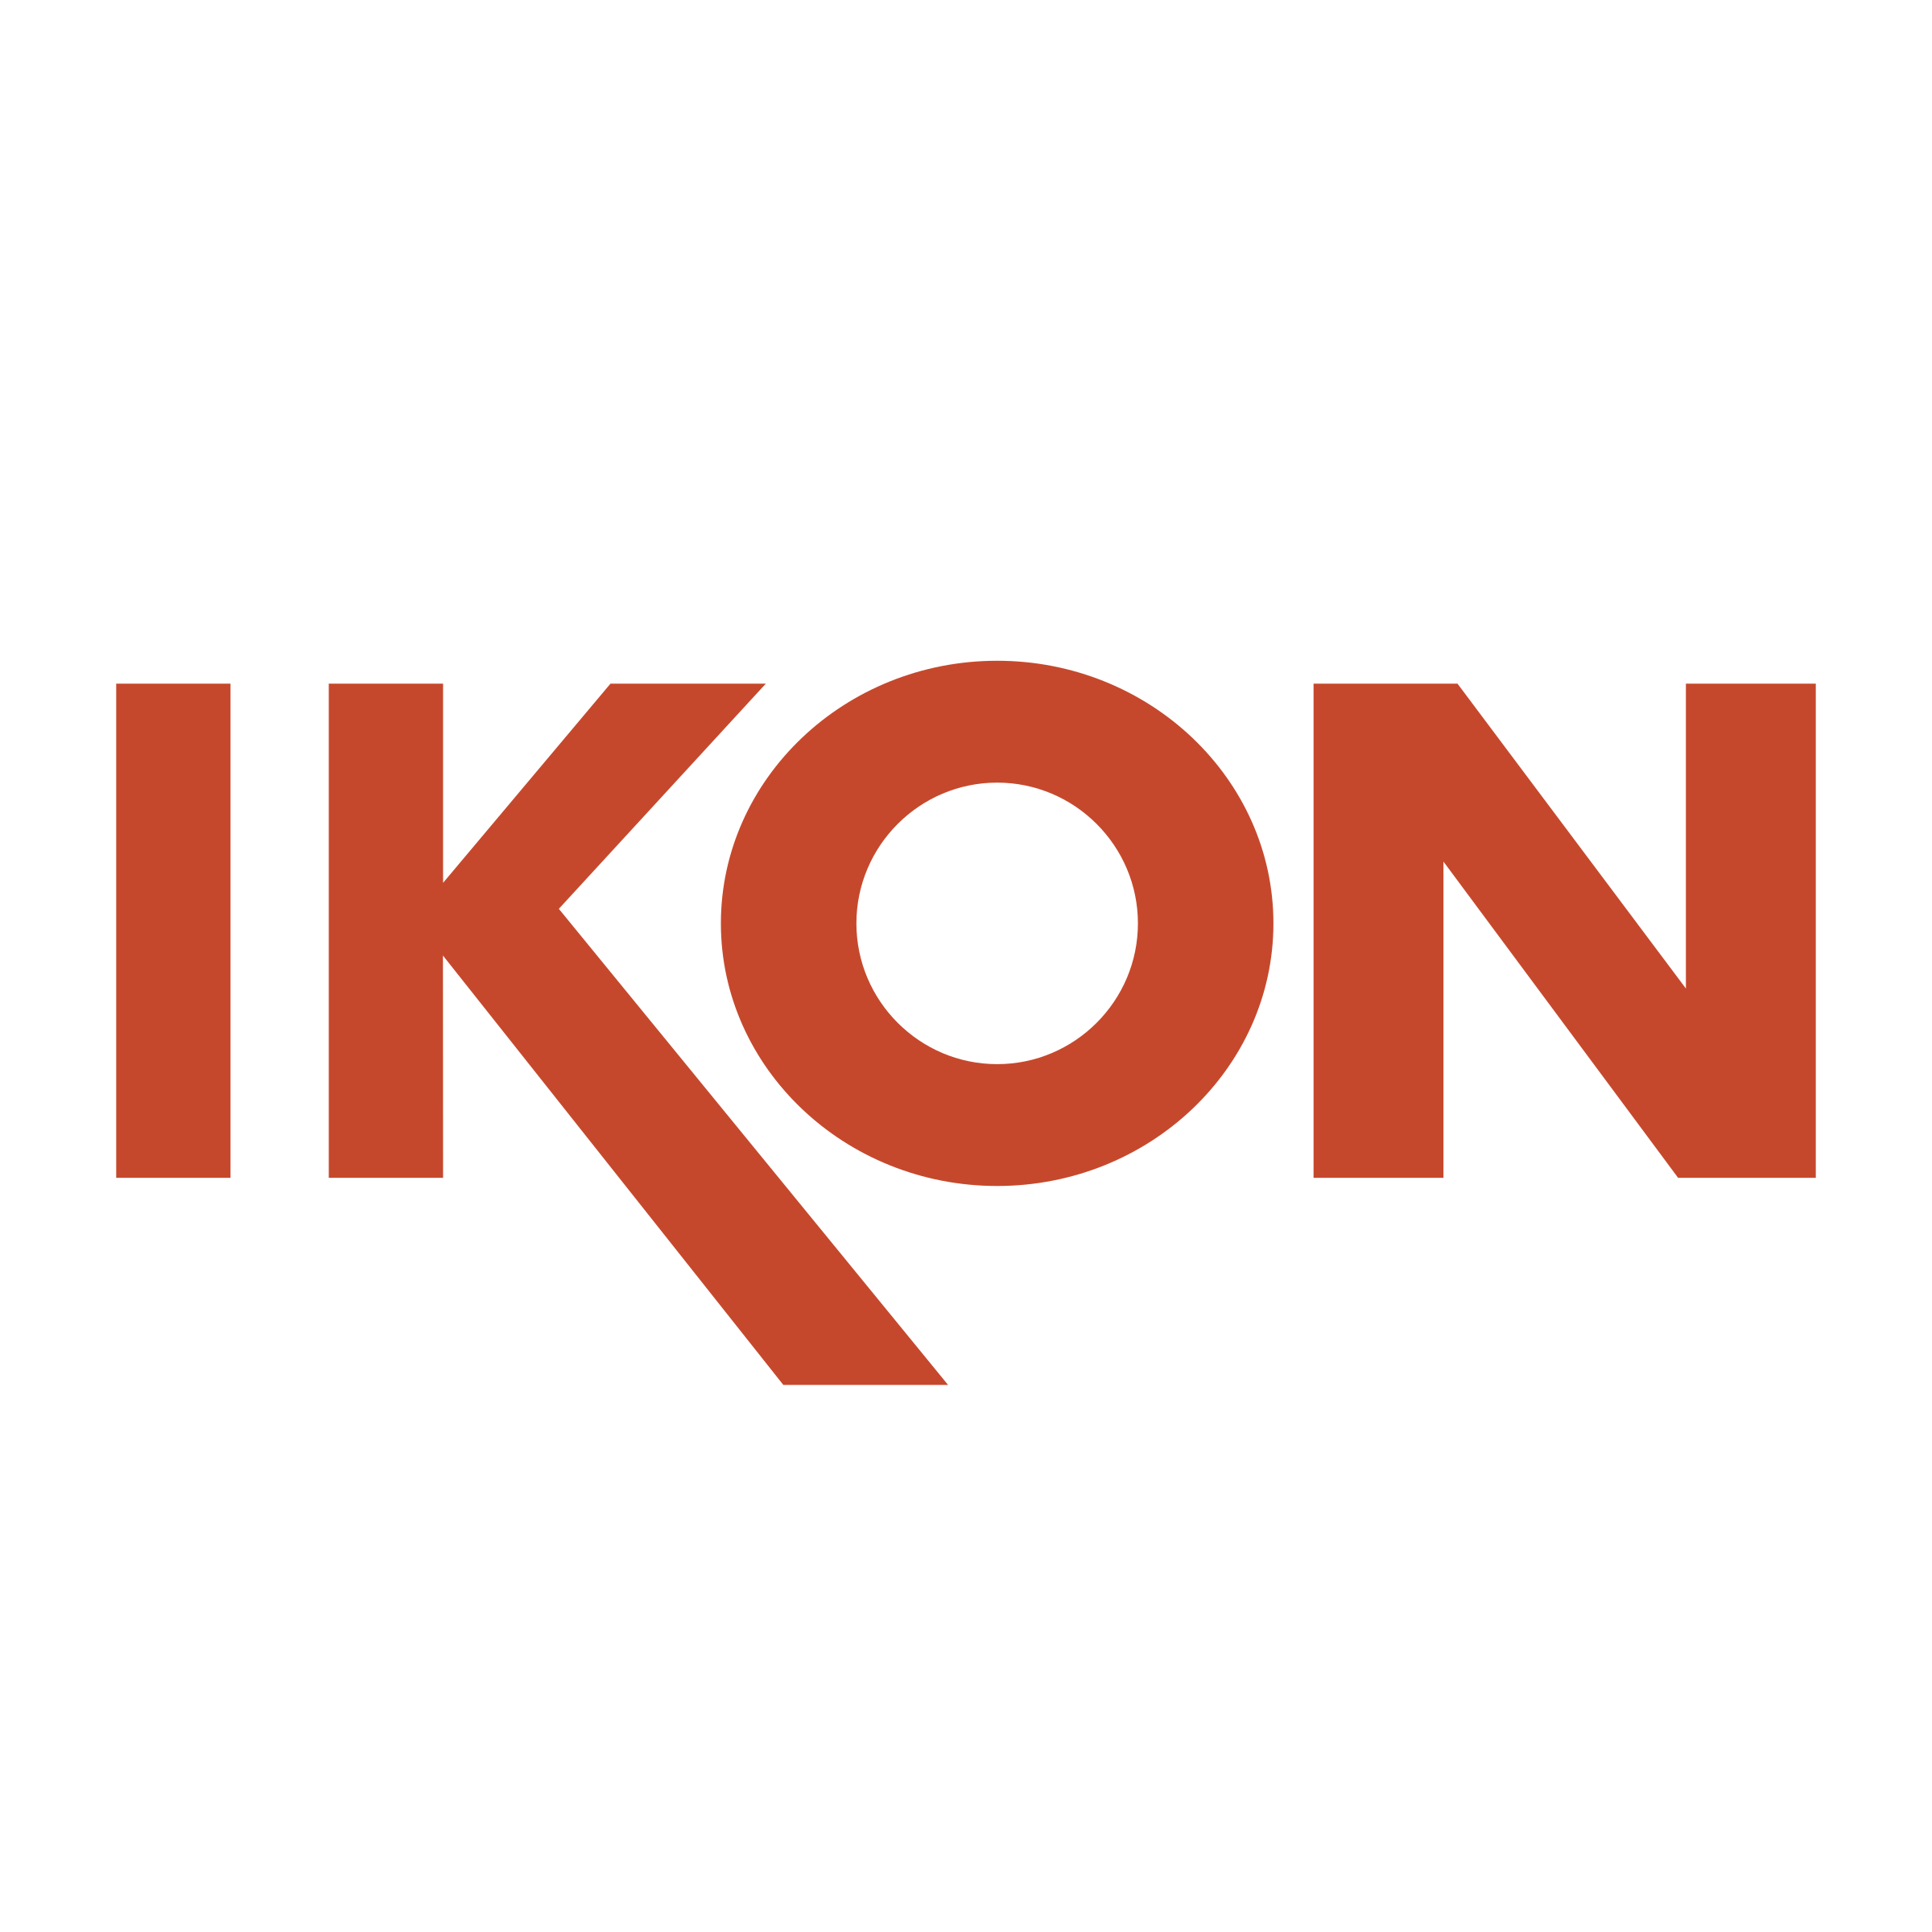 Ikon Logo - Ikon Logo PNG Transparent & SVG Vector - Freebie Supply